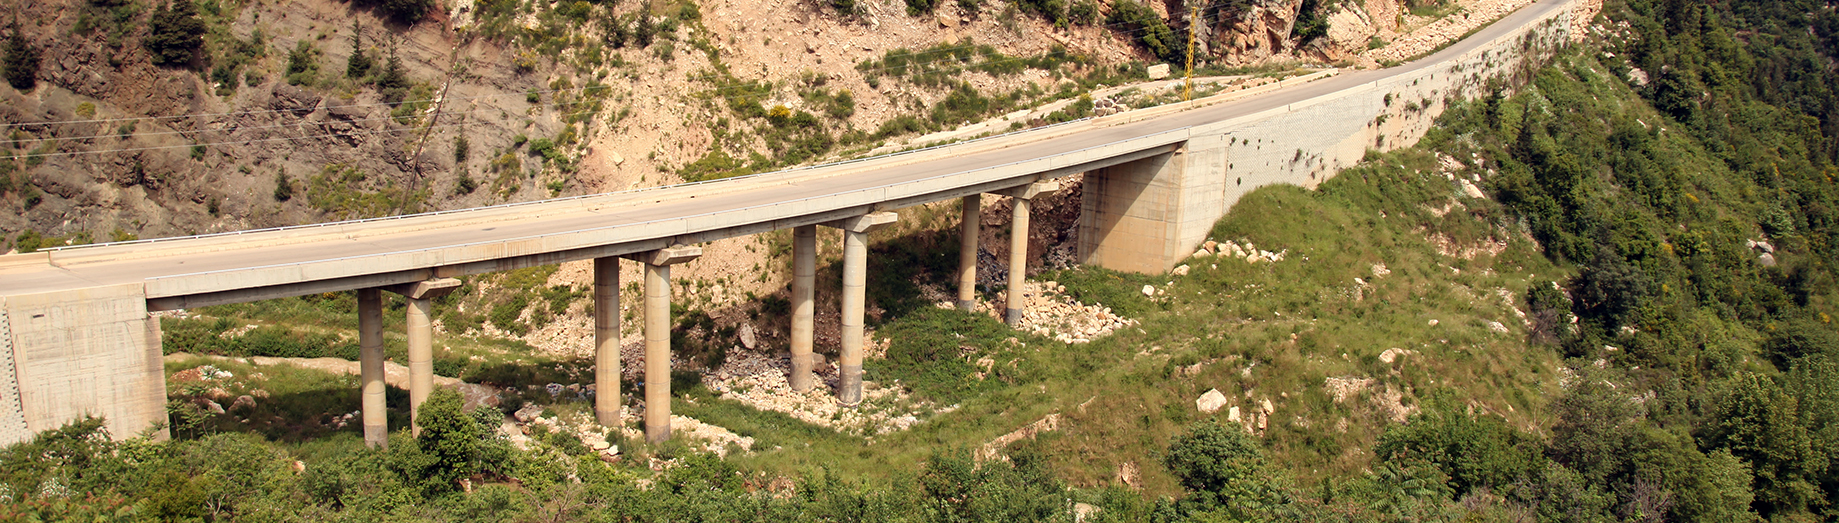 Construction of Mrah Sreij - Bakhoun - Taran Road